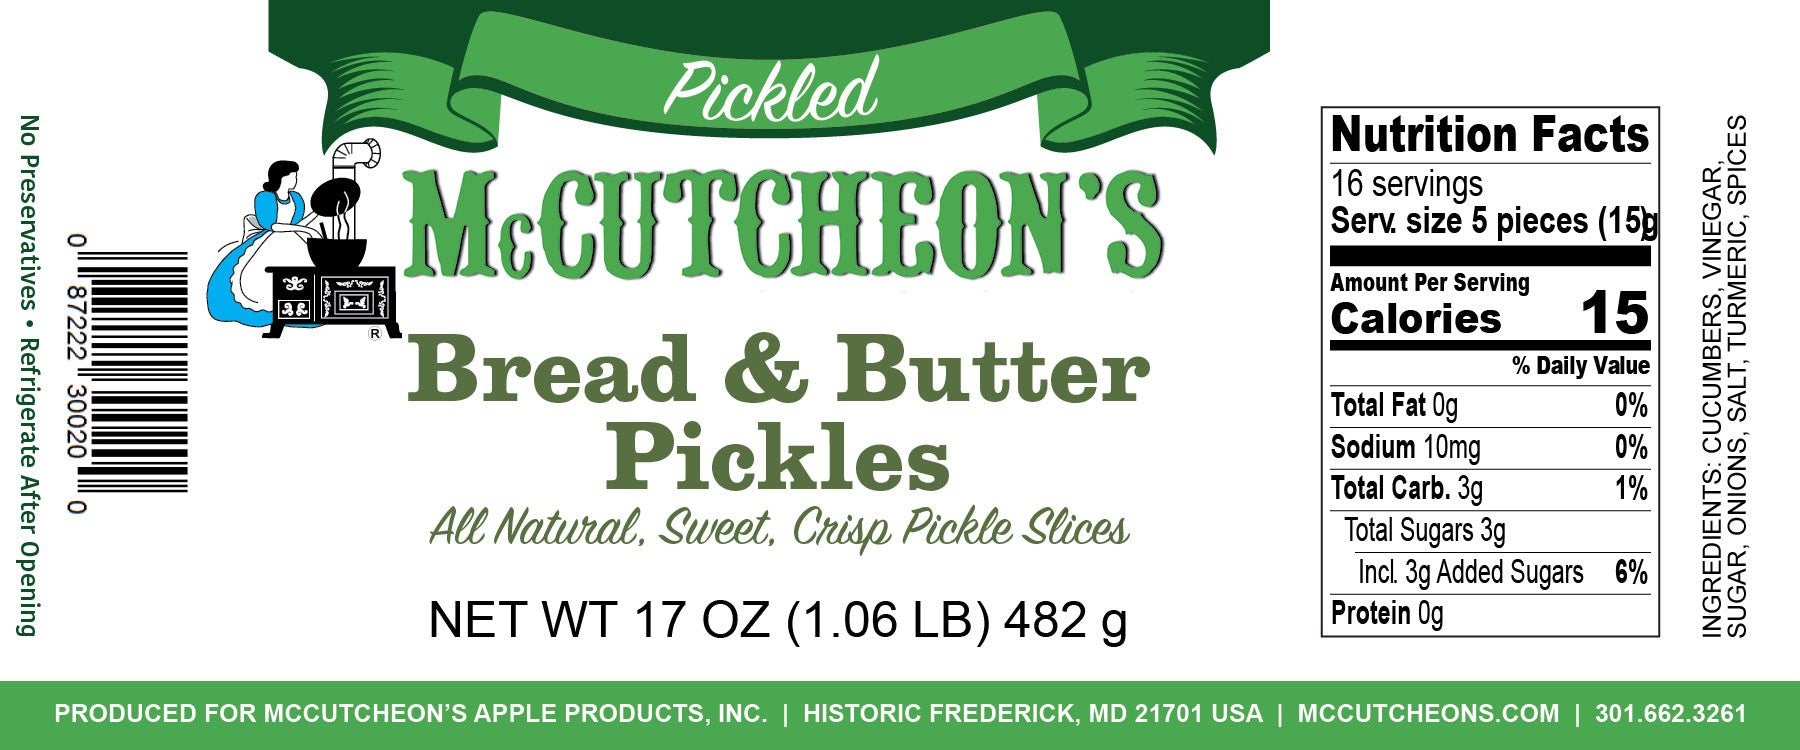 nutrition label for McCutcheon's bread & butter pickles